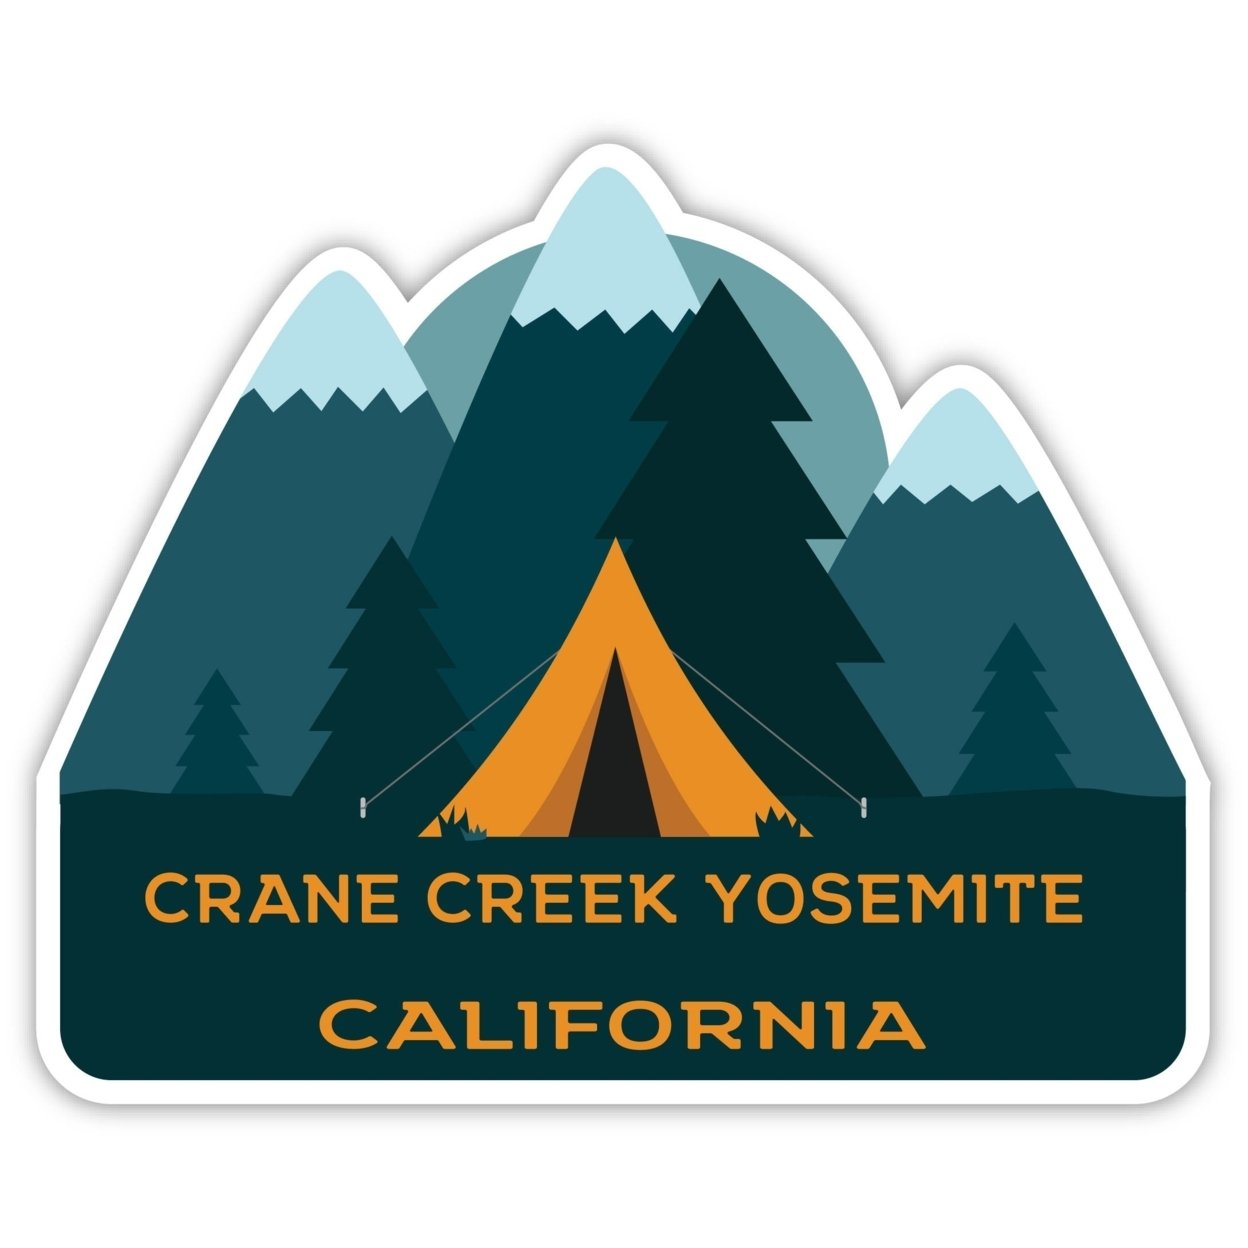 Crane Creek Yosemite California Souvenir Decorative Stickers (Choose Theme And Size) - 4-Pack, 2-Inch, Bear